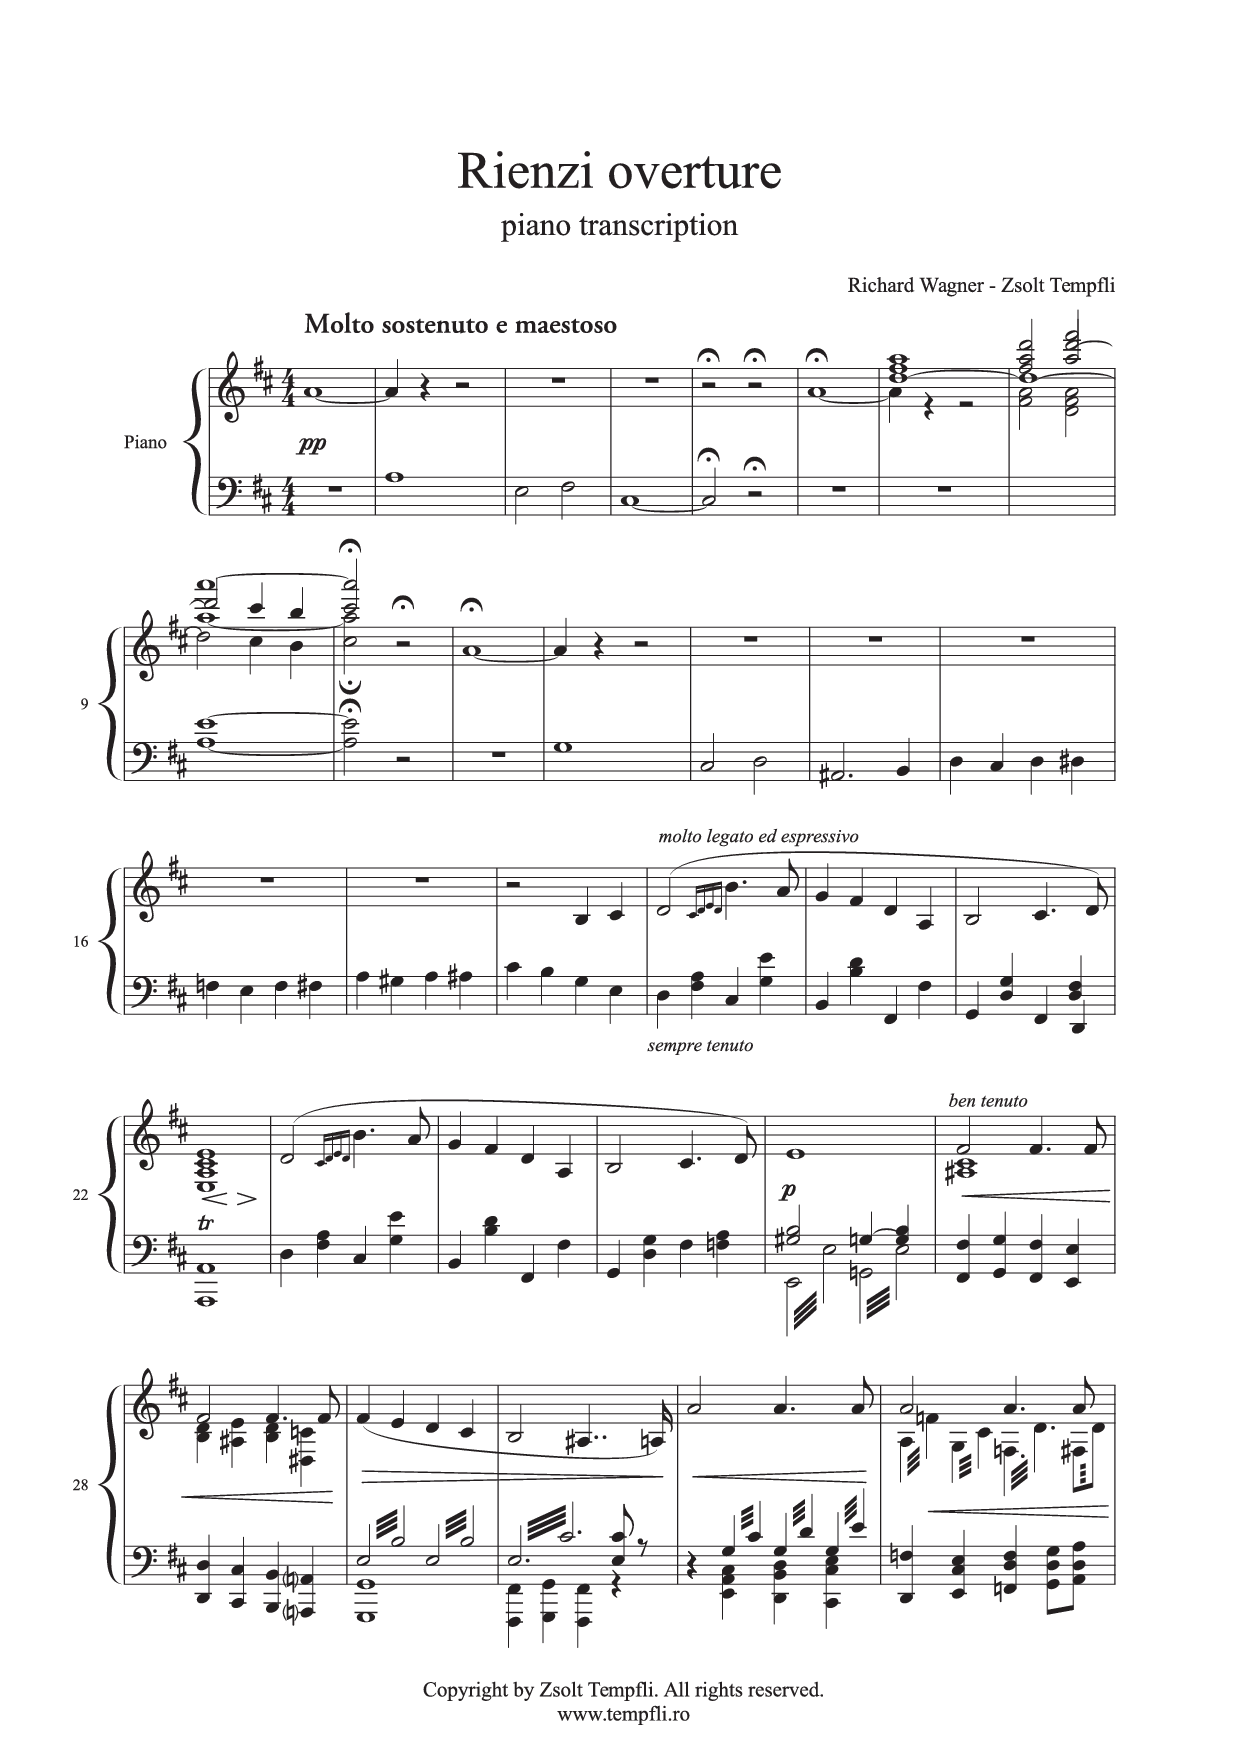 Zsolt Tempfli - Richard Wagner Rienzi overture piano transcription